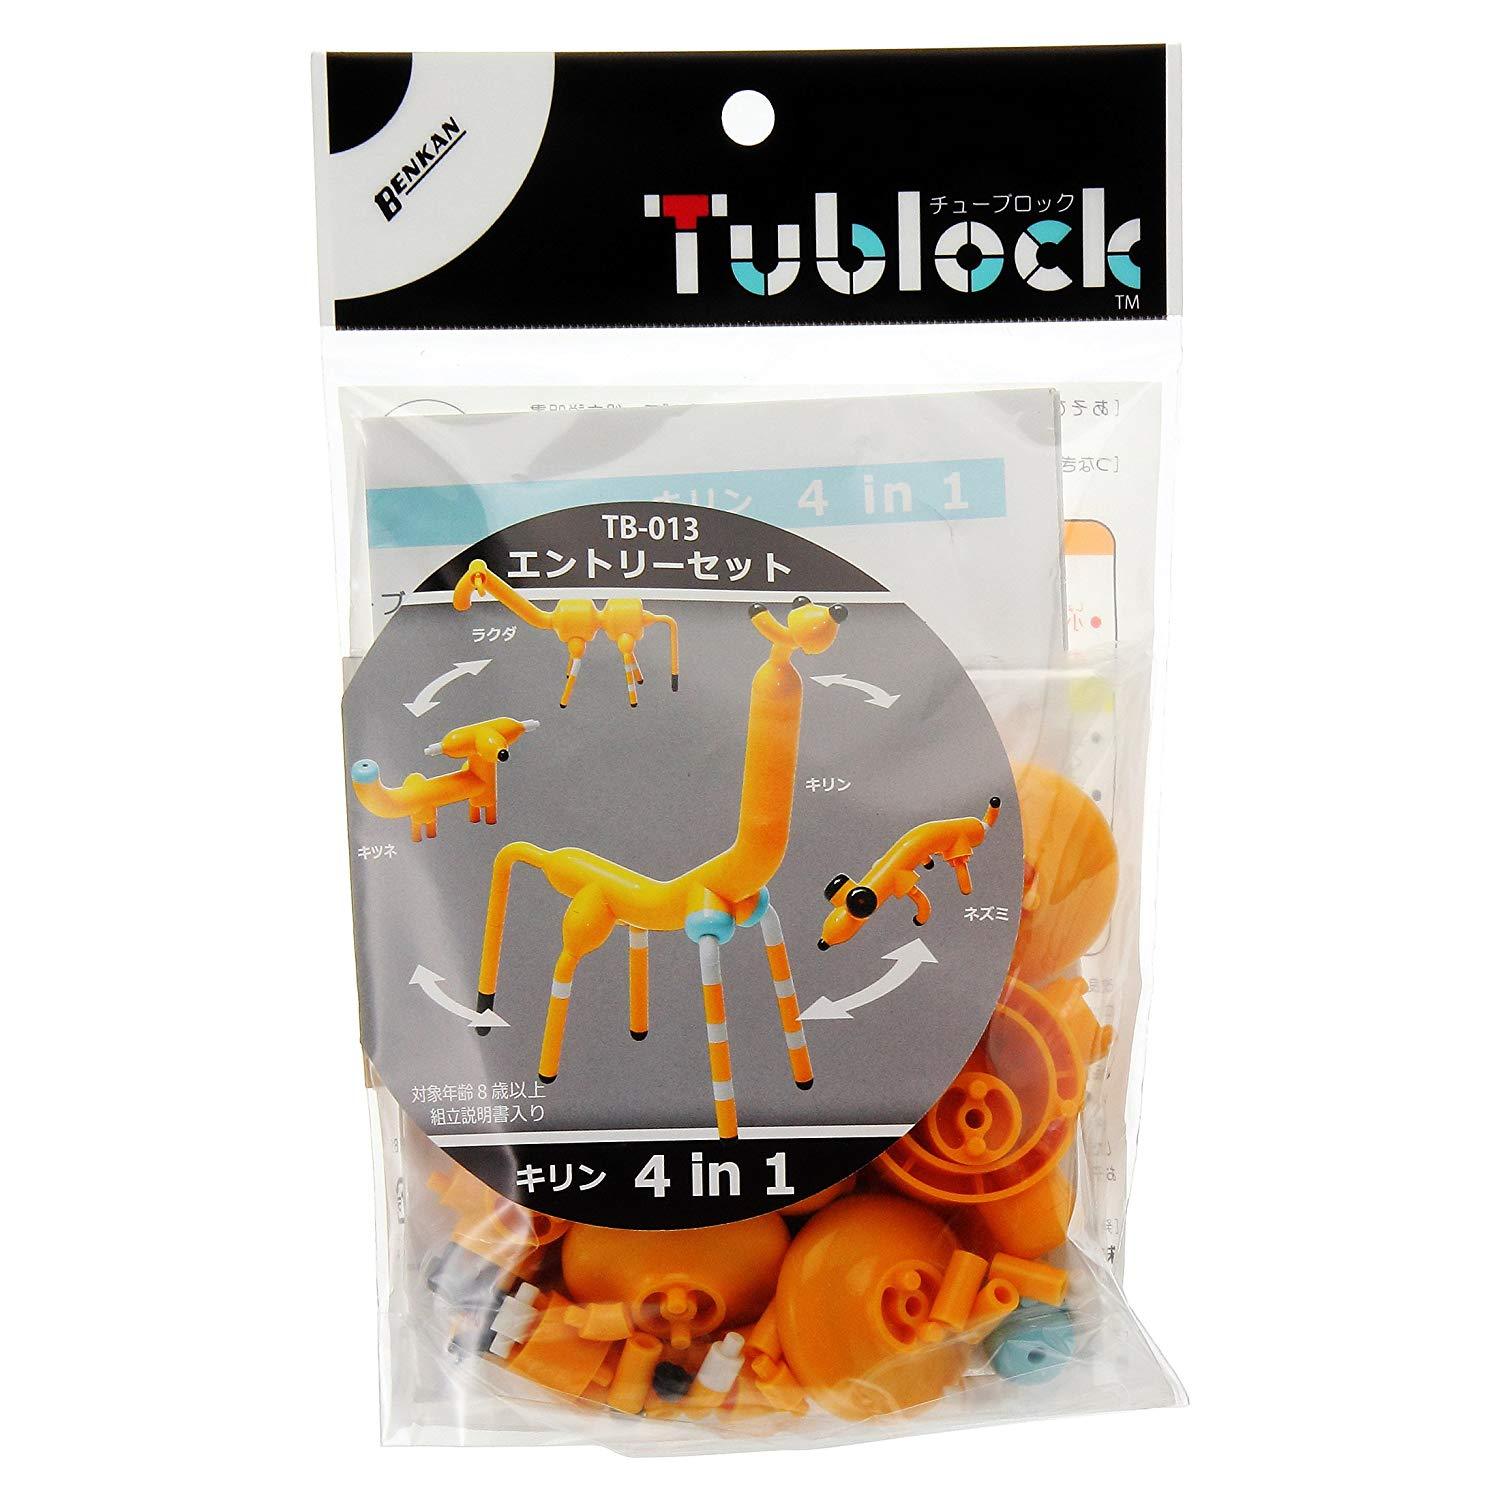 Tublock-Giraffe (4 in 1)